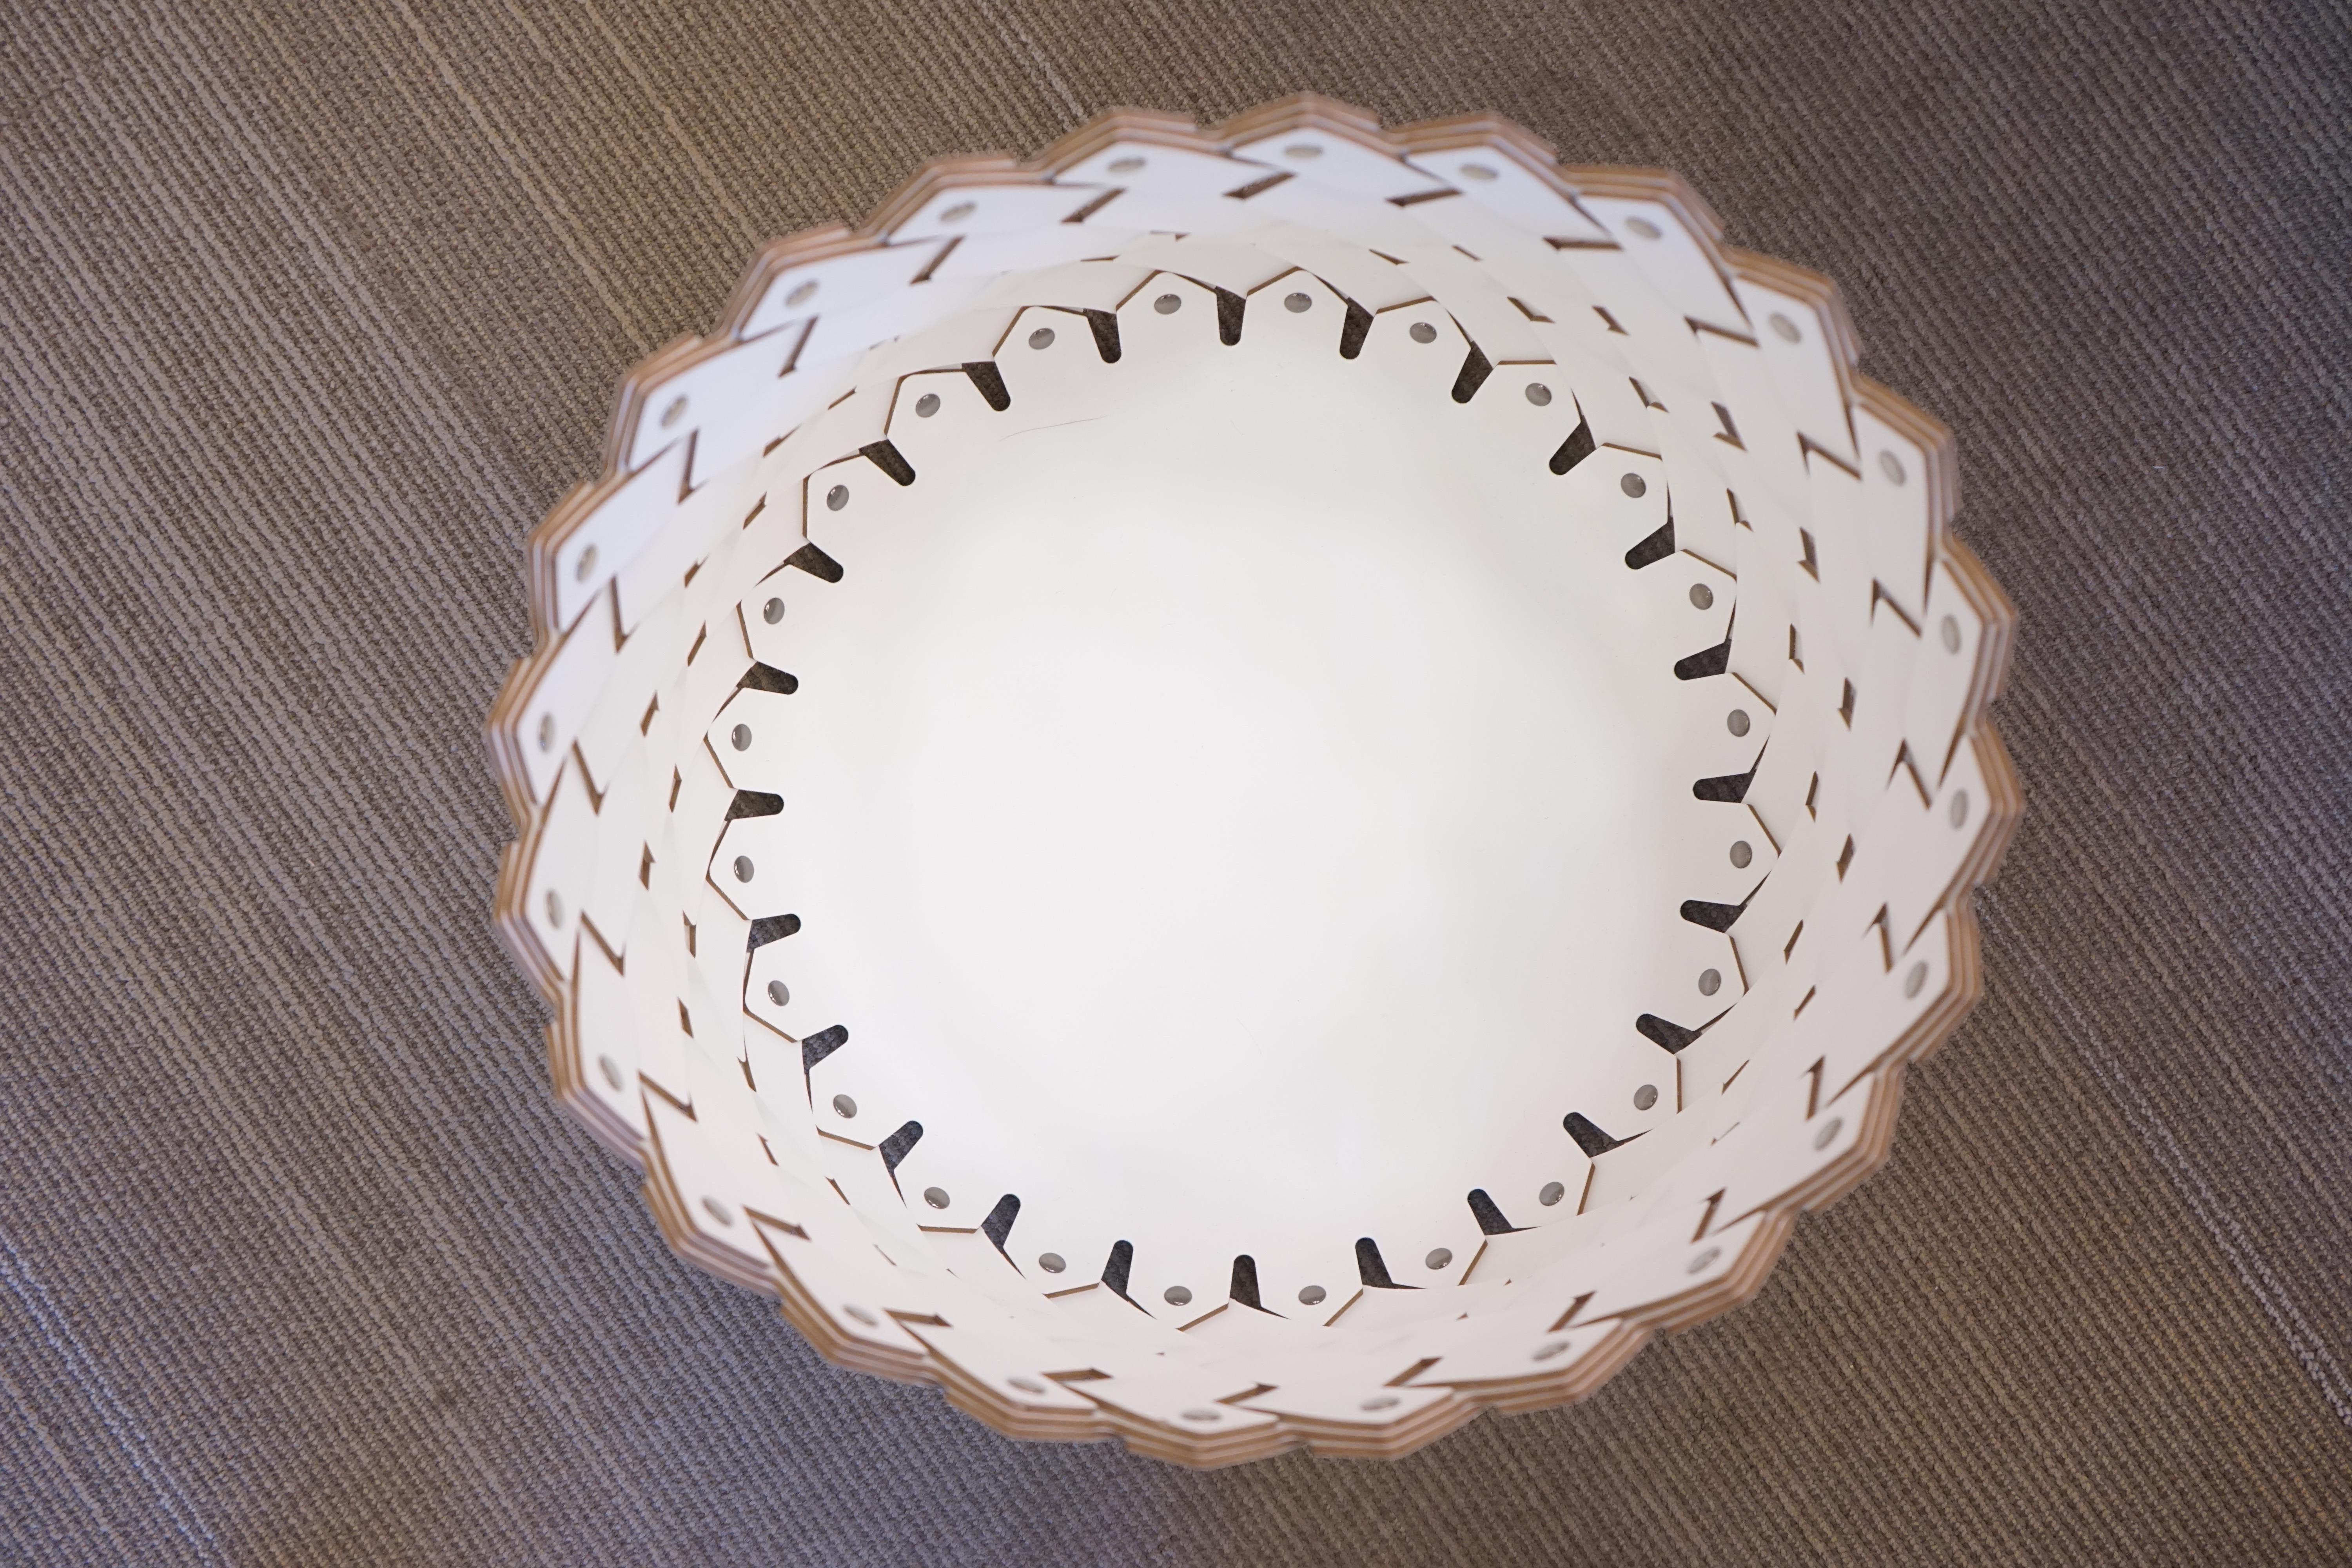 Contemporary white woven leather circular Almeria basket. Handmade in Italy.